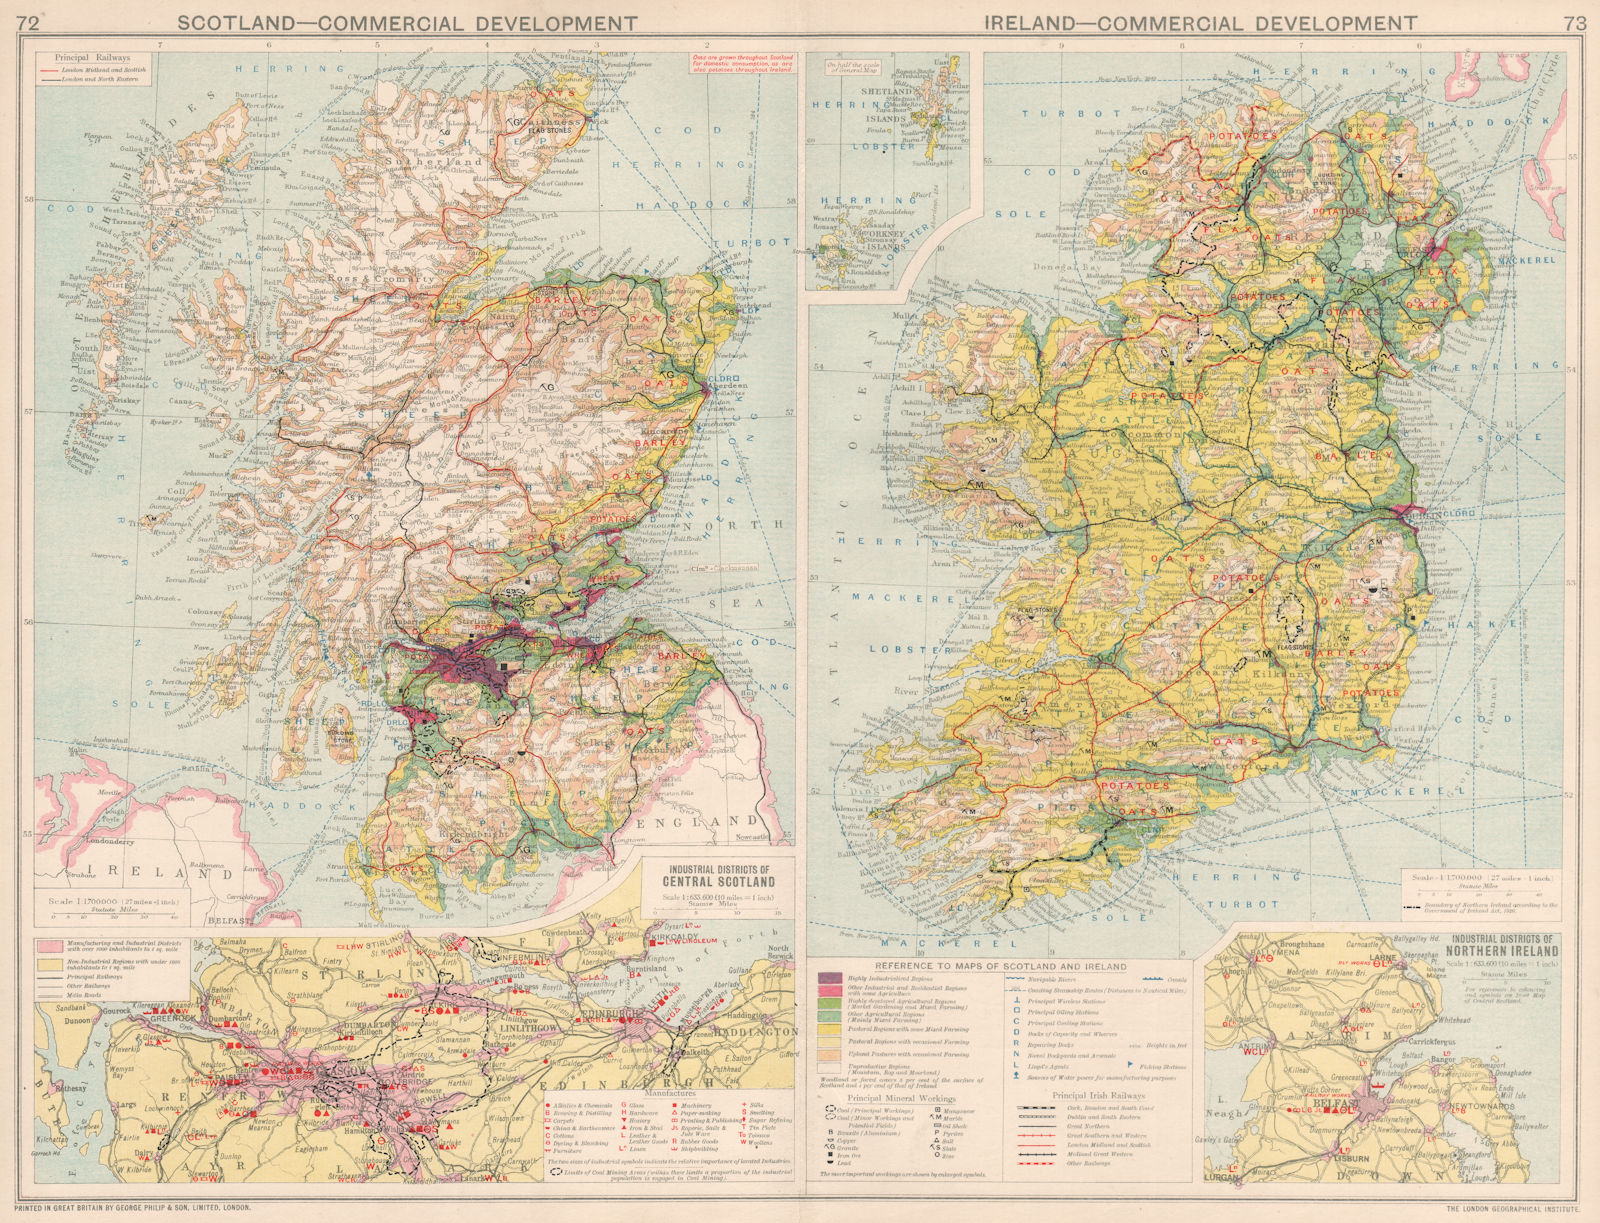 Scotland & Ireland. Commercial Development. Manufacturing & mining 1925 map